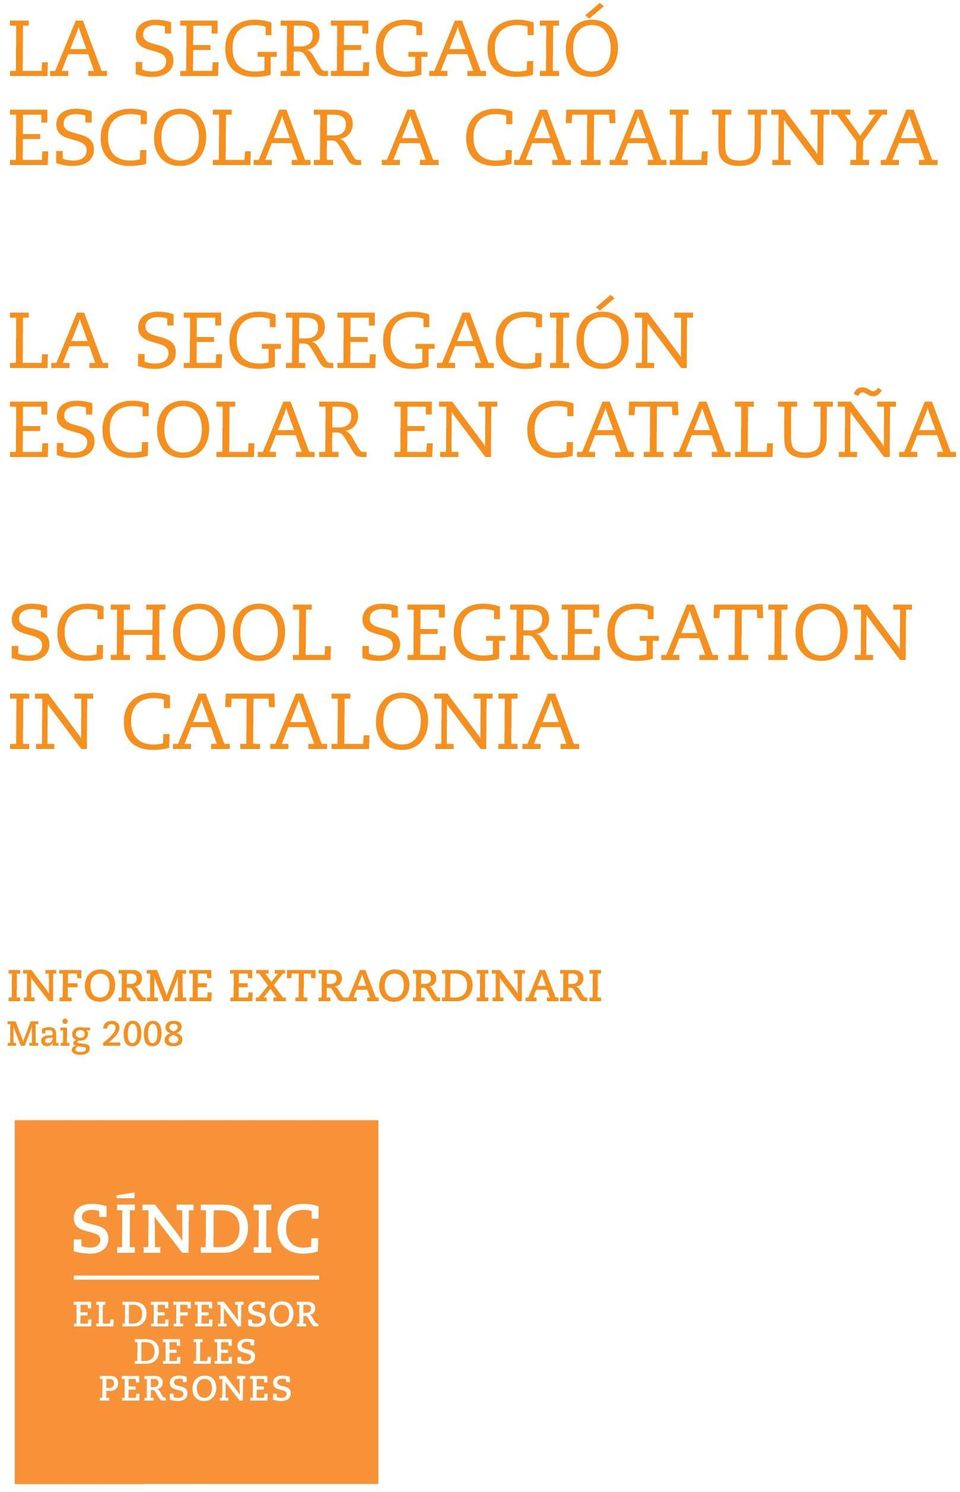 SEGREGATION IN CATALONIA INFORME